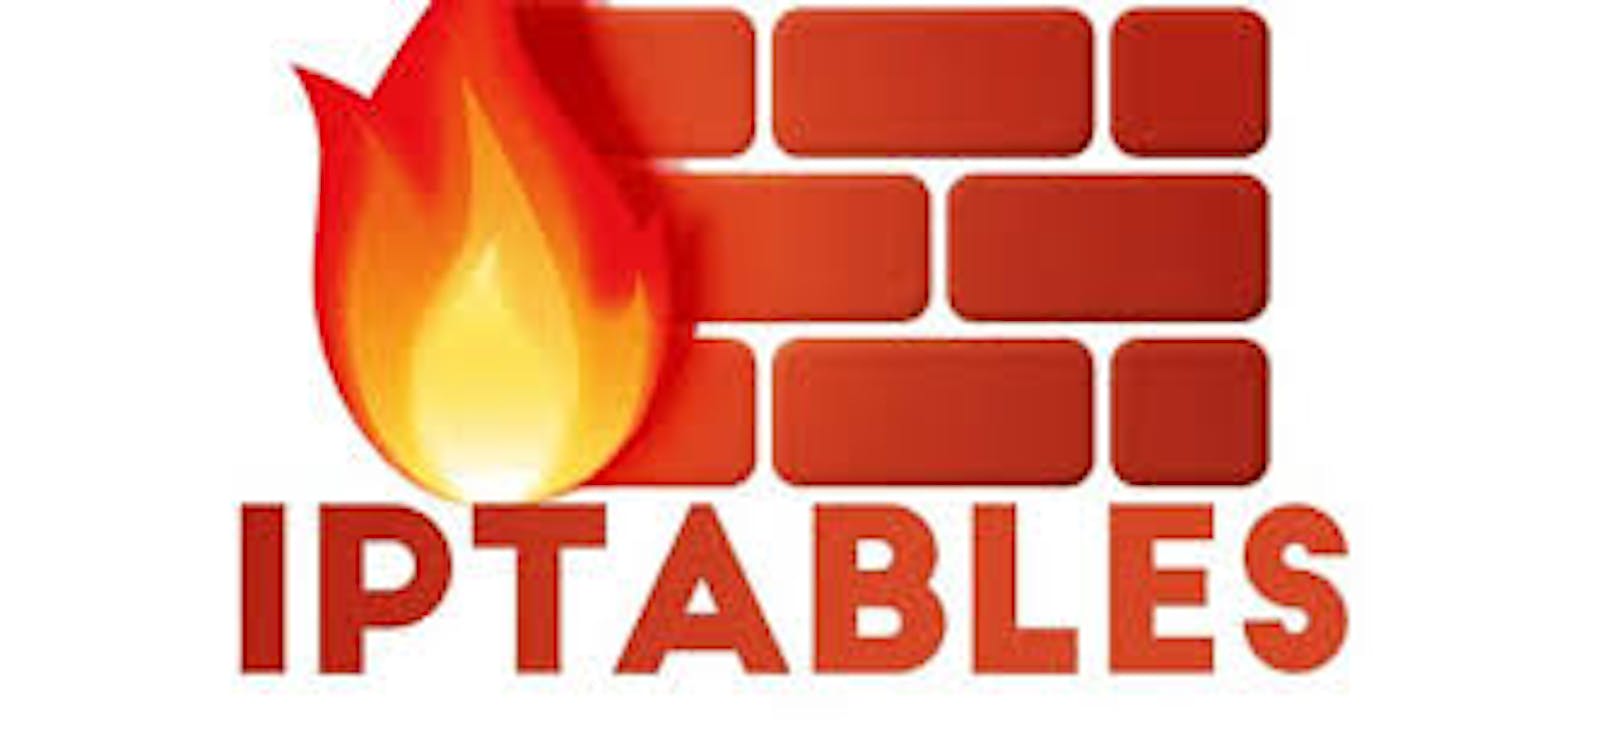 General Iptables Firewall Rules